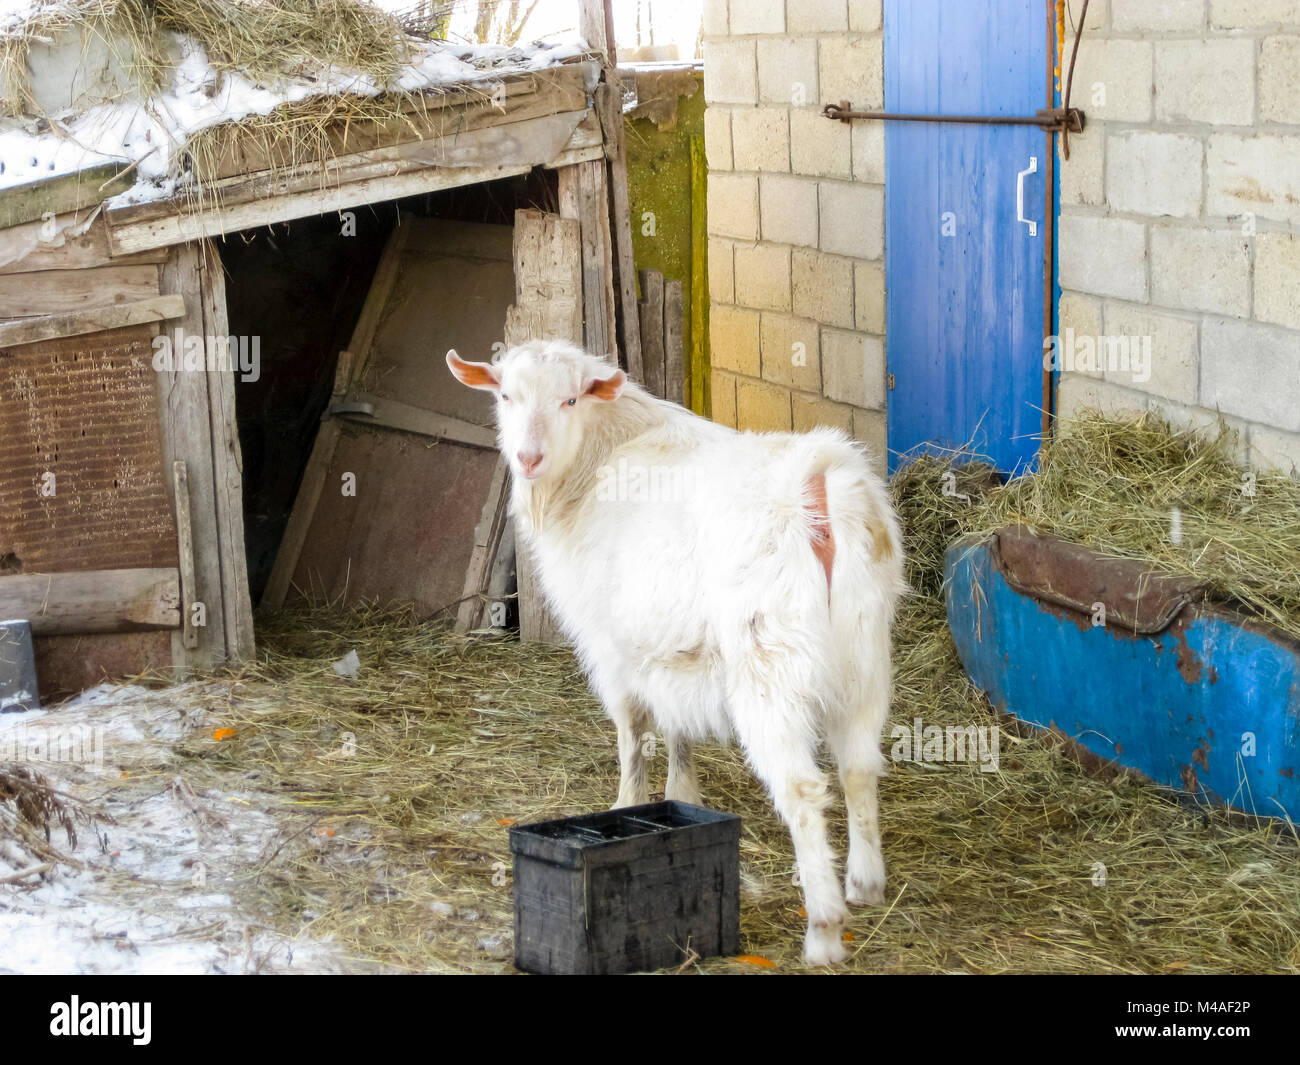 Goats in the household. Mini goat farm Stock Photo